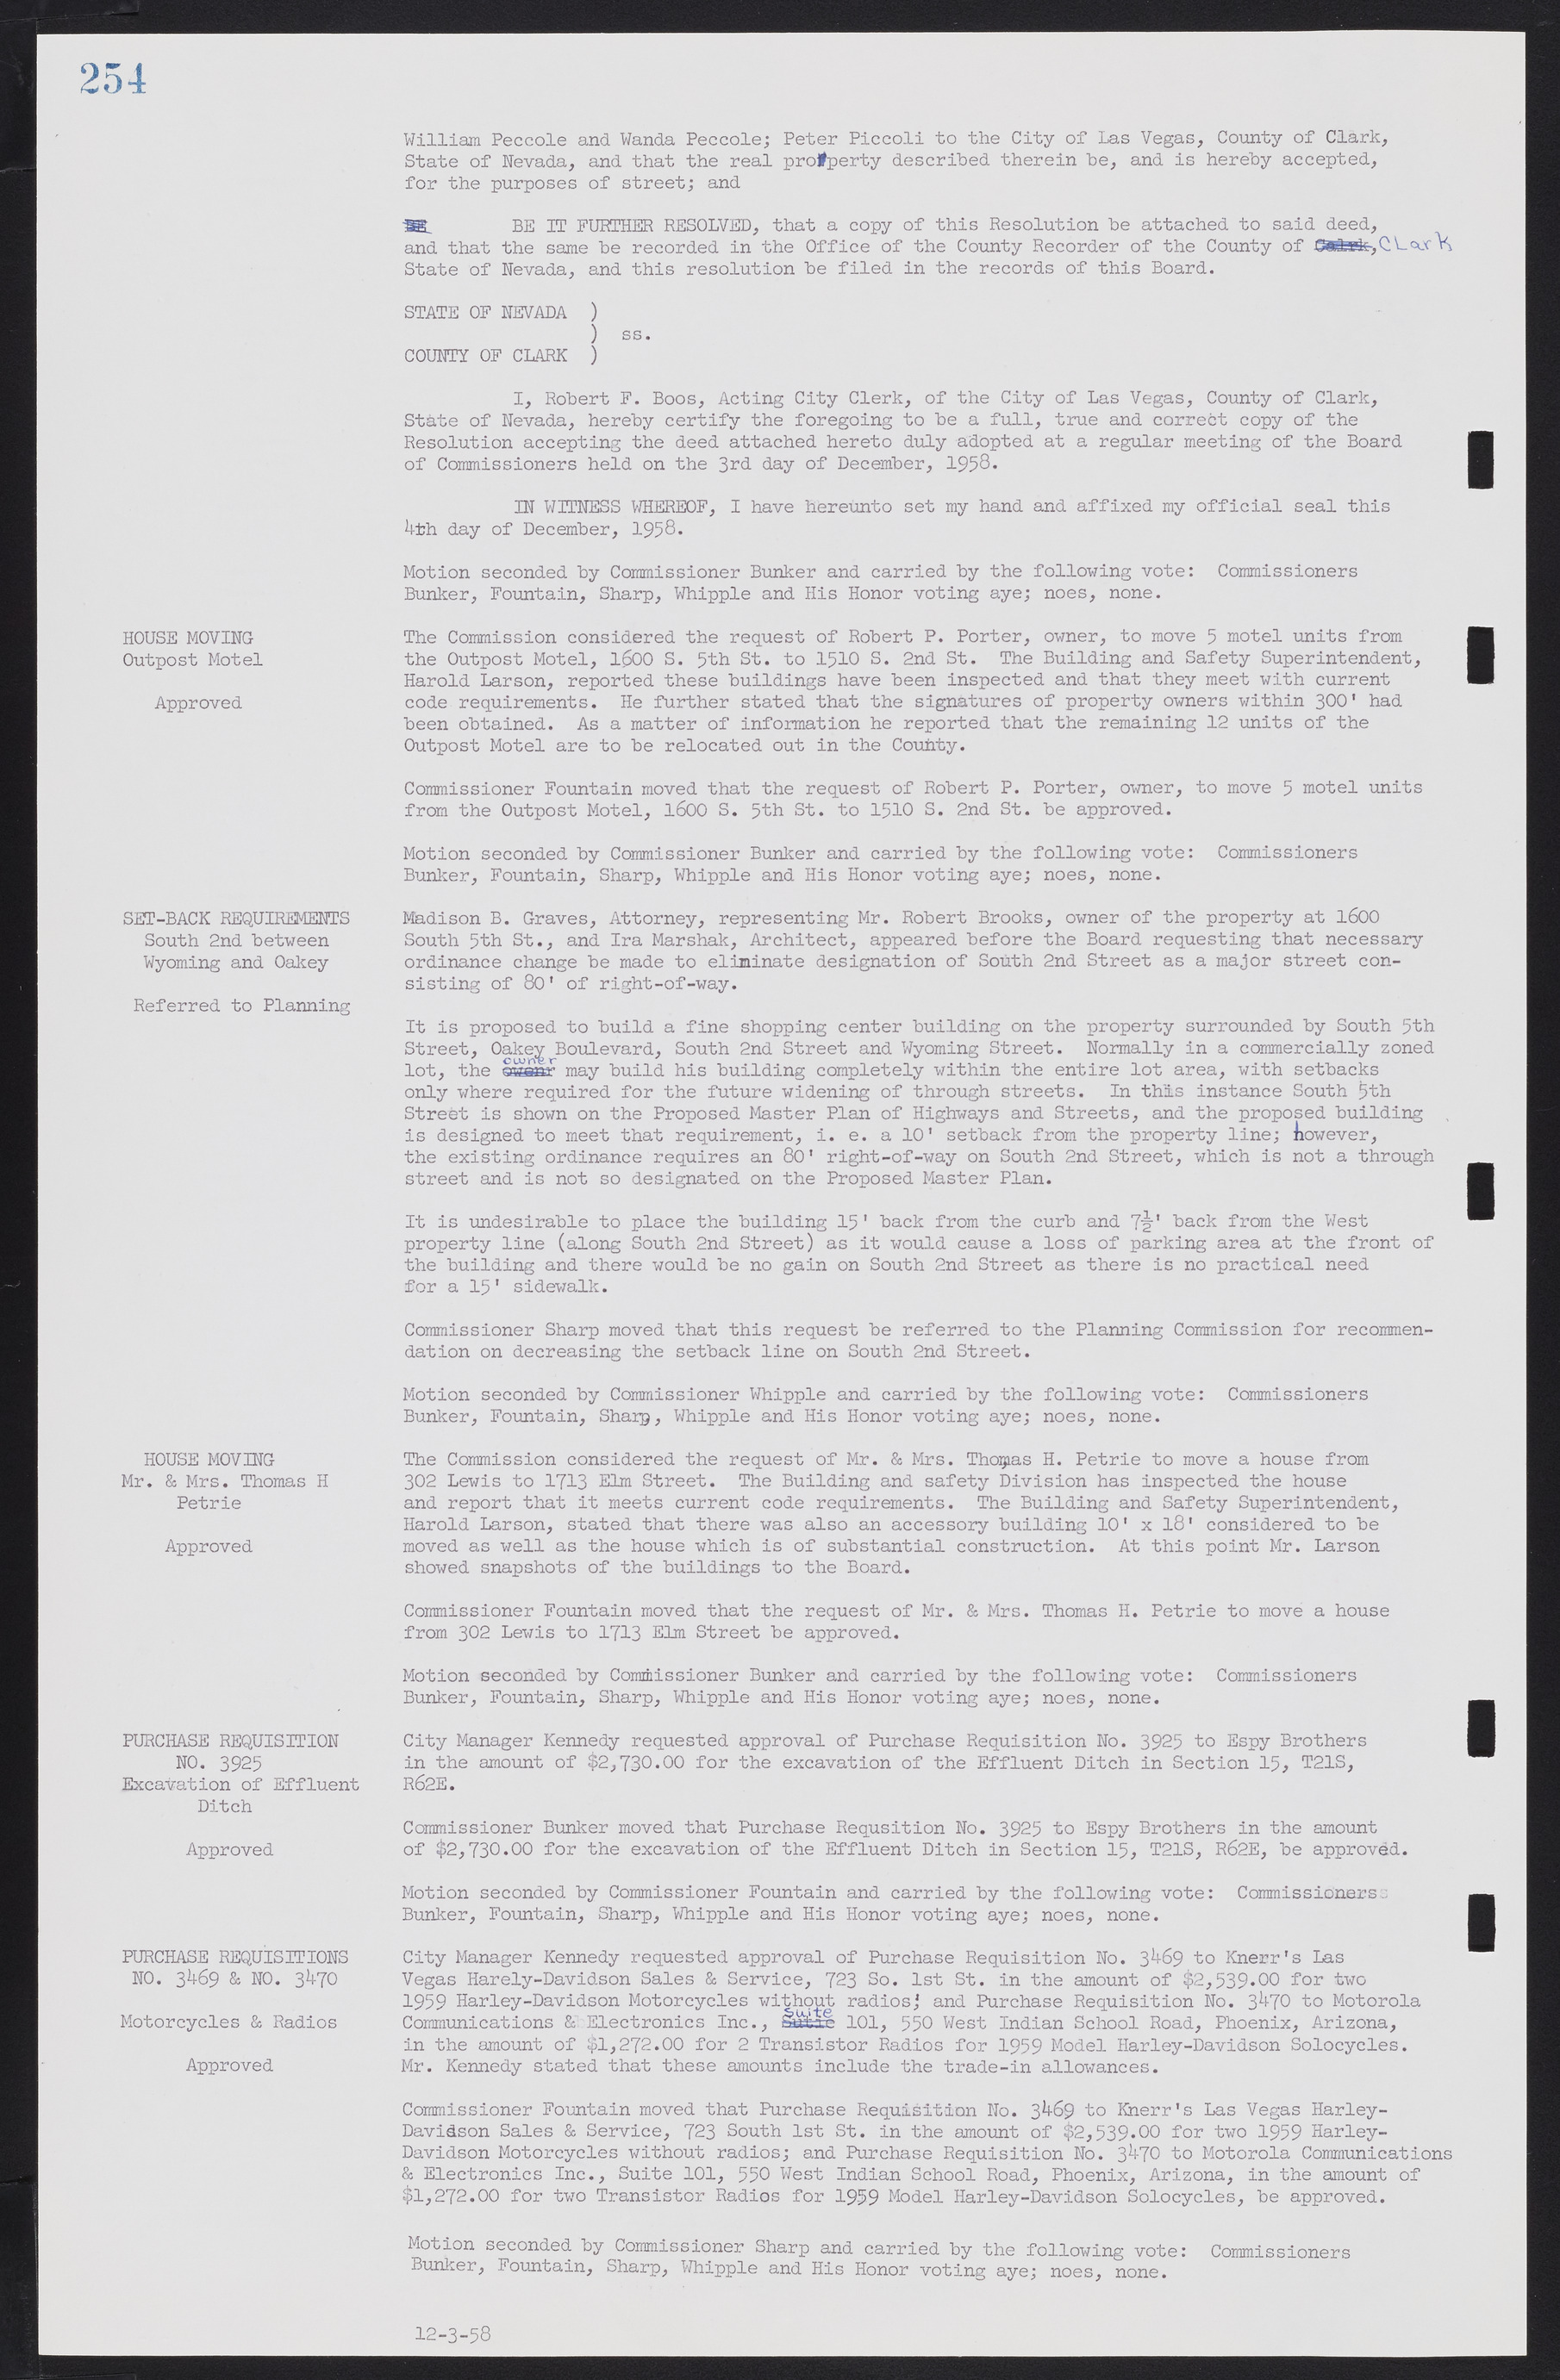 Las Vegas City Commission Minutes, November 20, 1957 to December 2, 1959, lvc000011-262